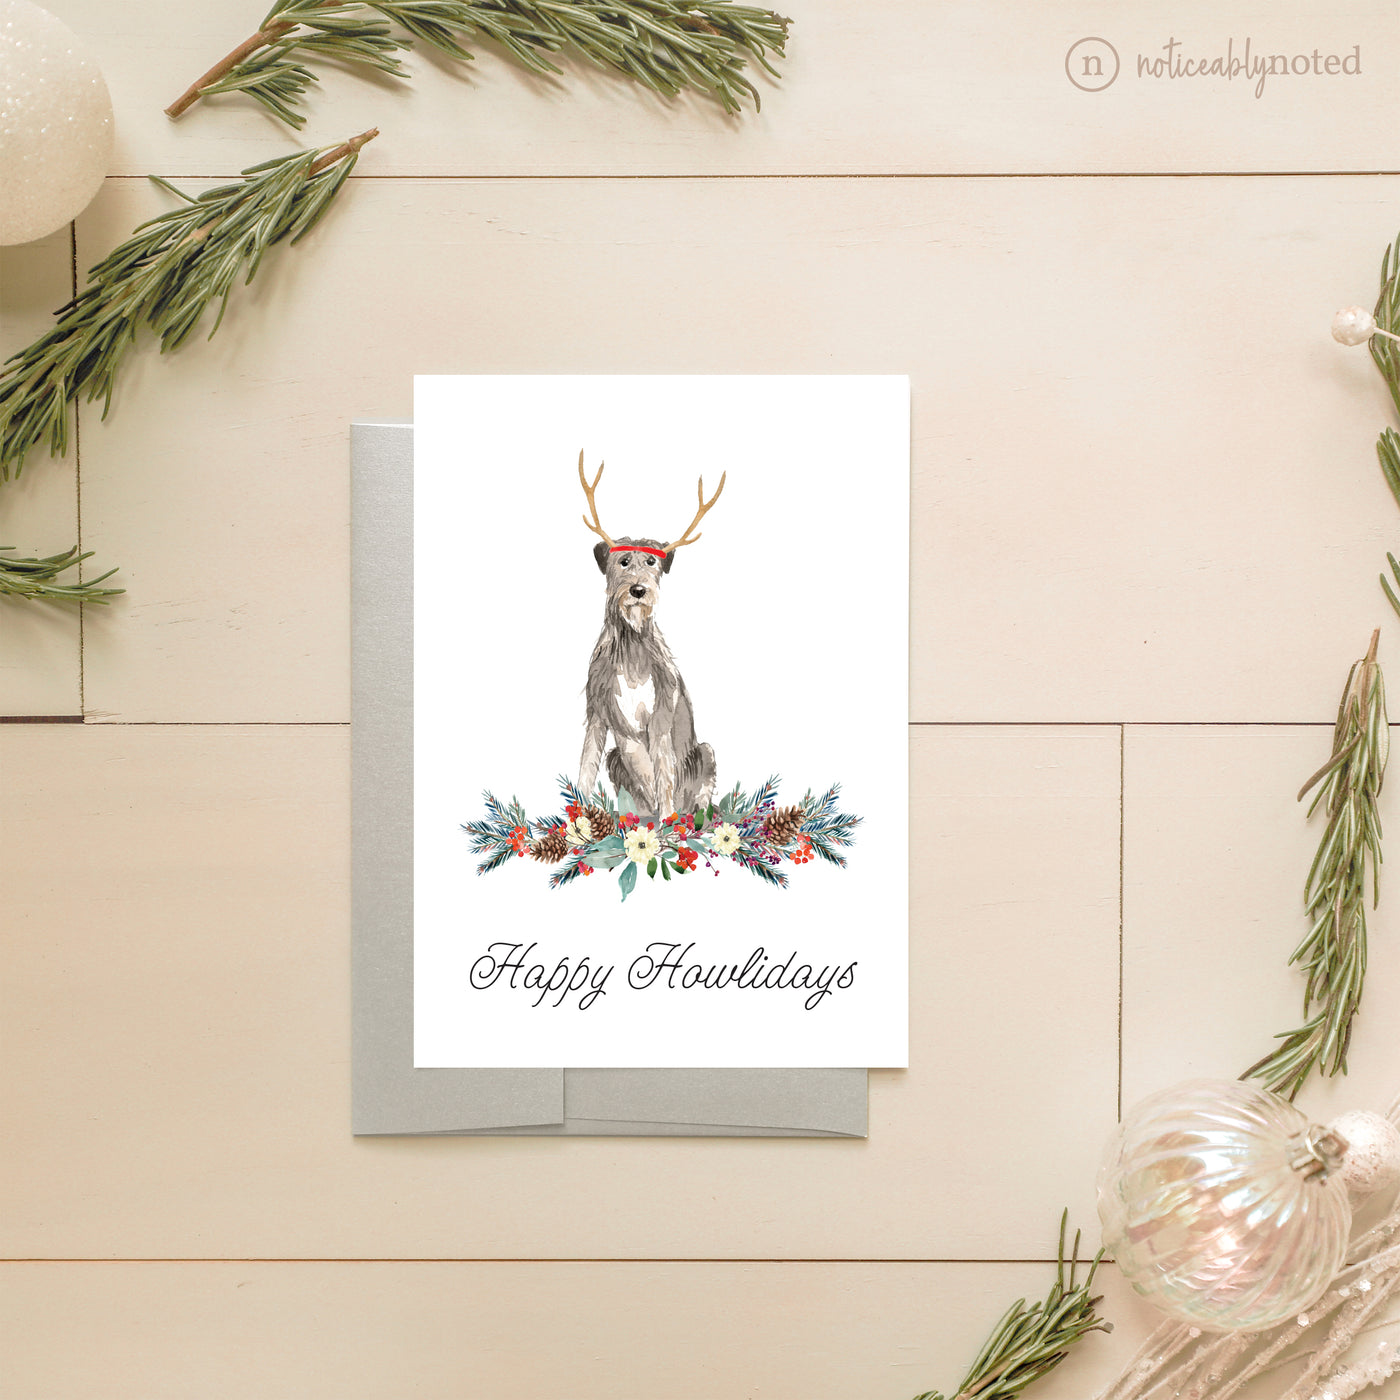 Irish Wolfhound Dog Holiday Card | Noticeably Noted